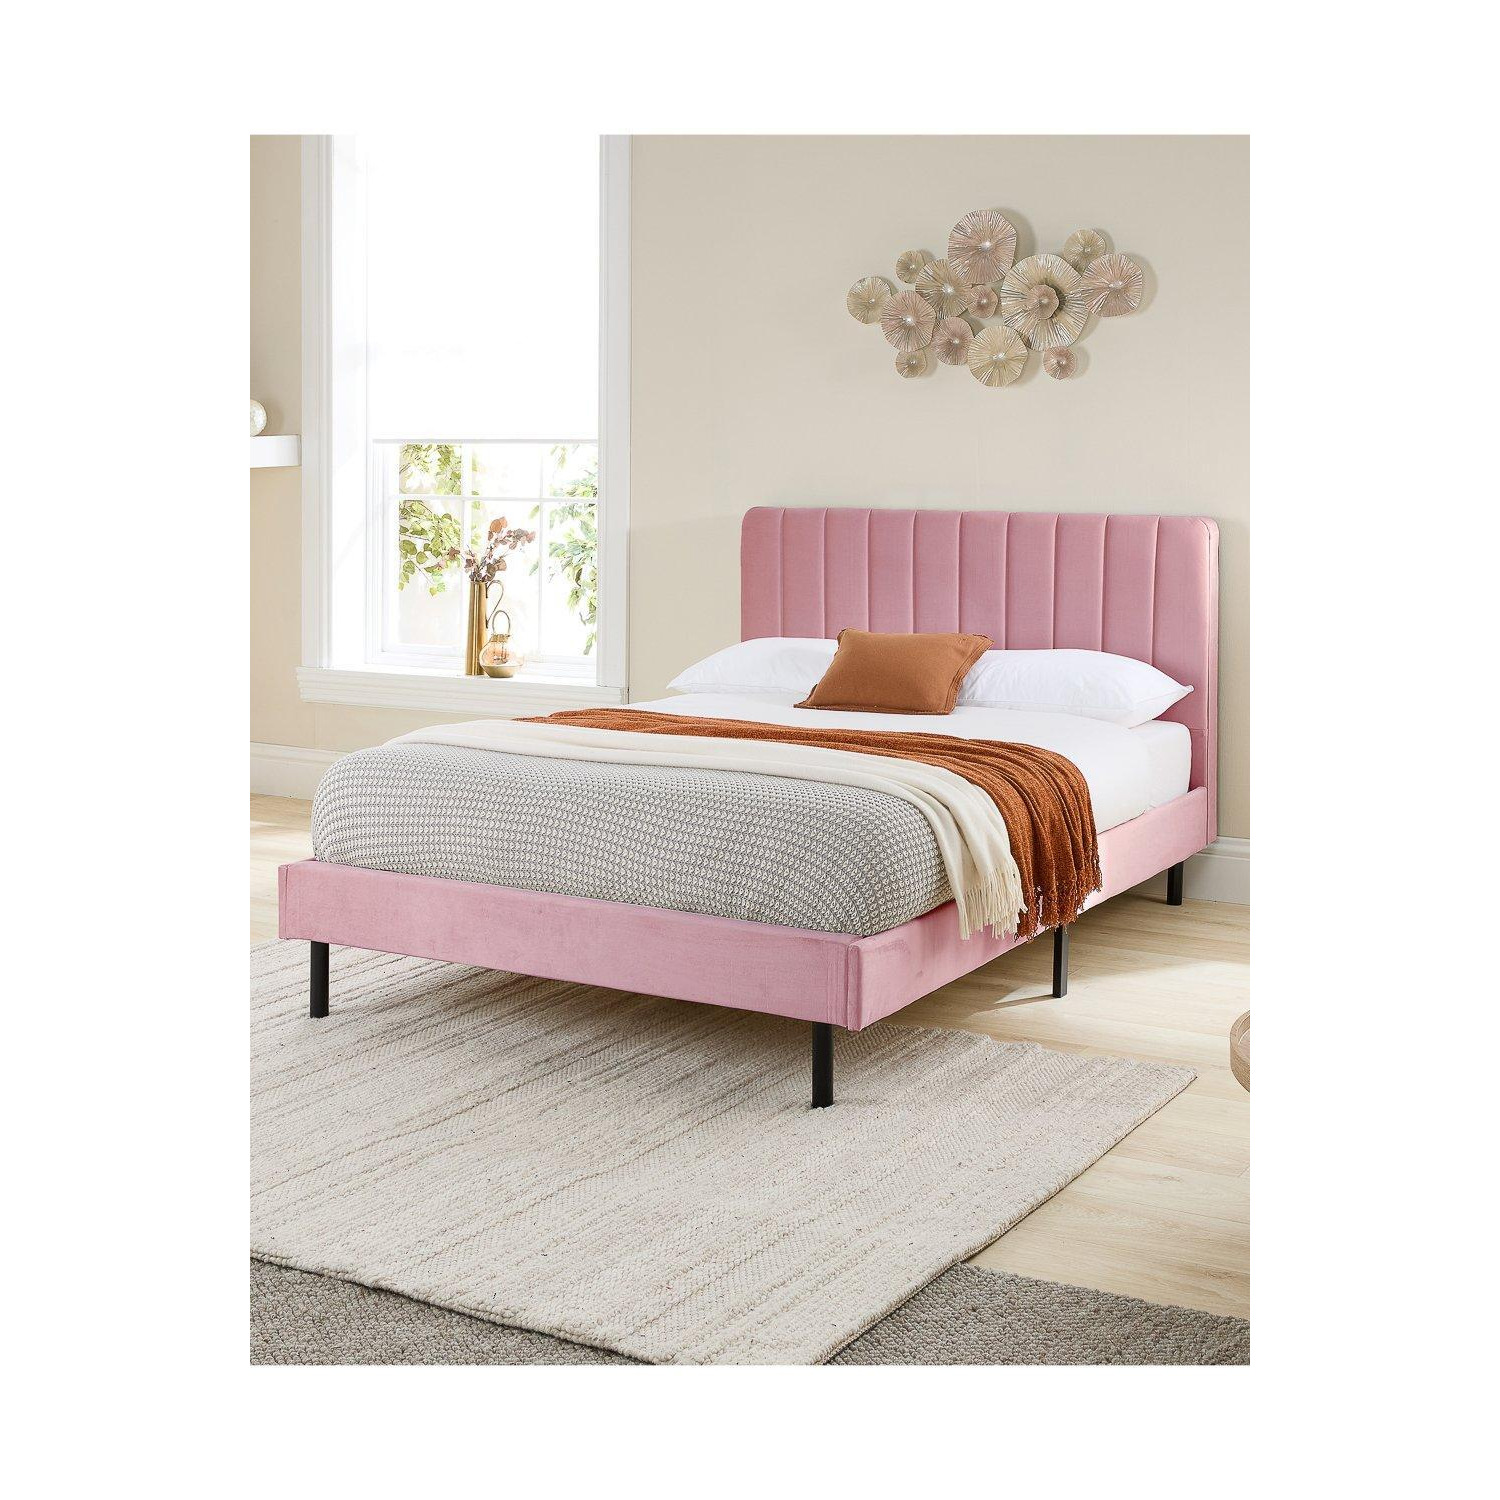 Rosella Upholstered Bed - image 1